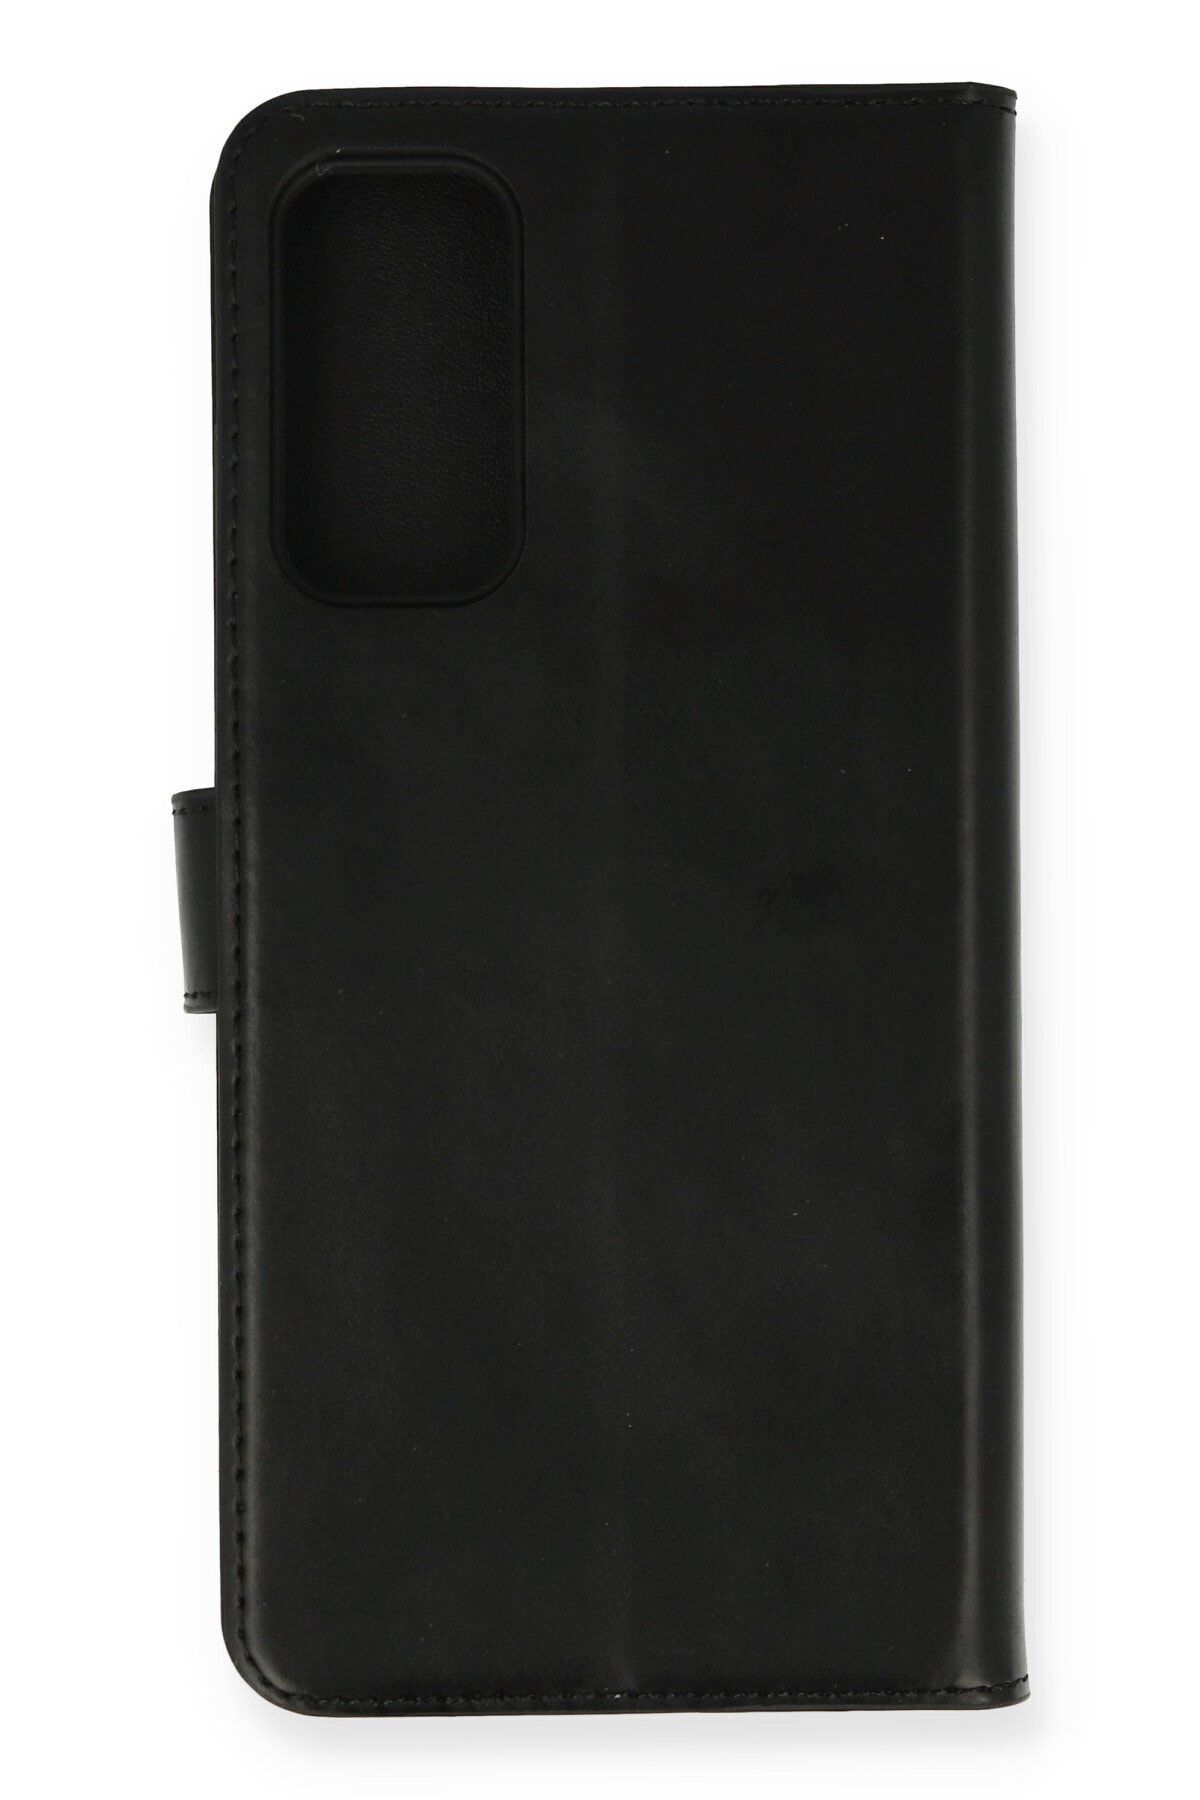 Samsung Ankacep Galaxy S20 Fe Kılıf Trend S Plus Kapaklı Kılıf - Siyah